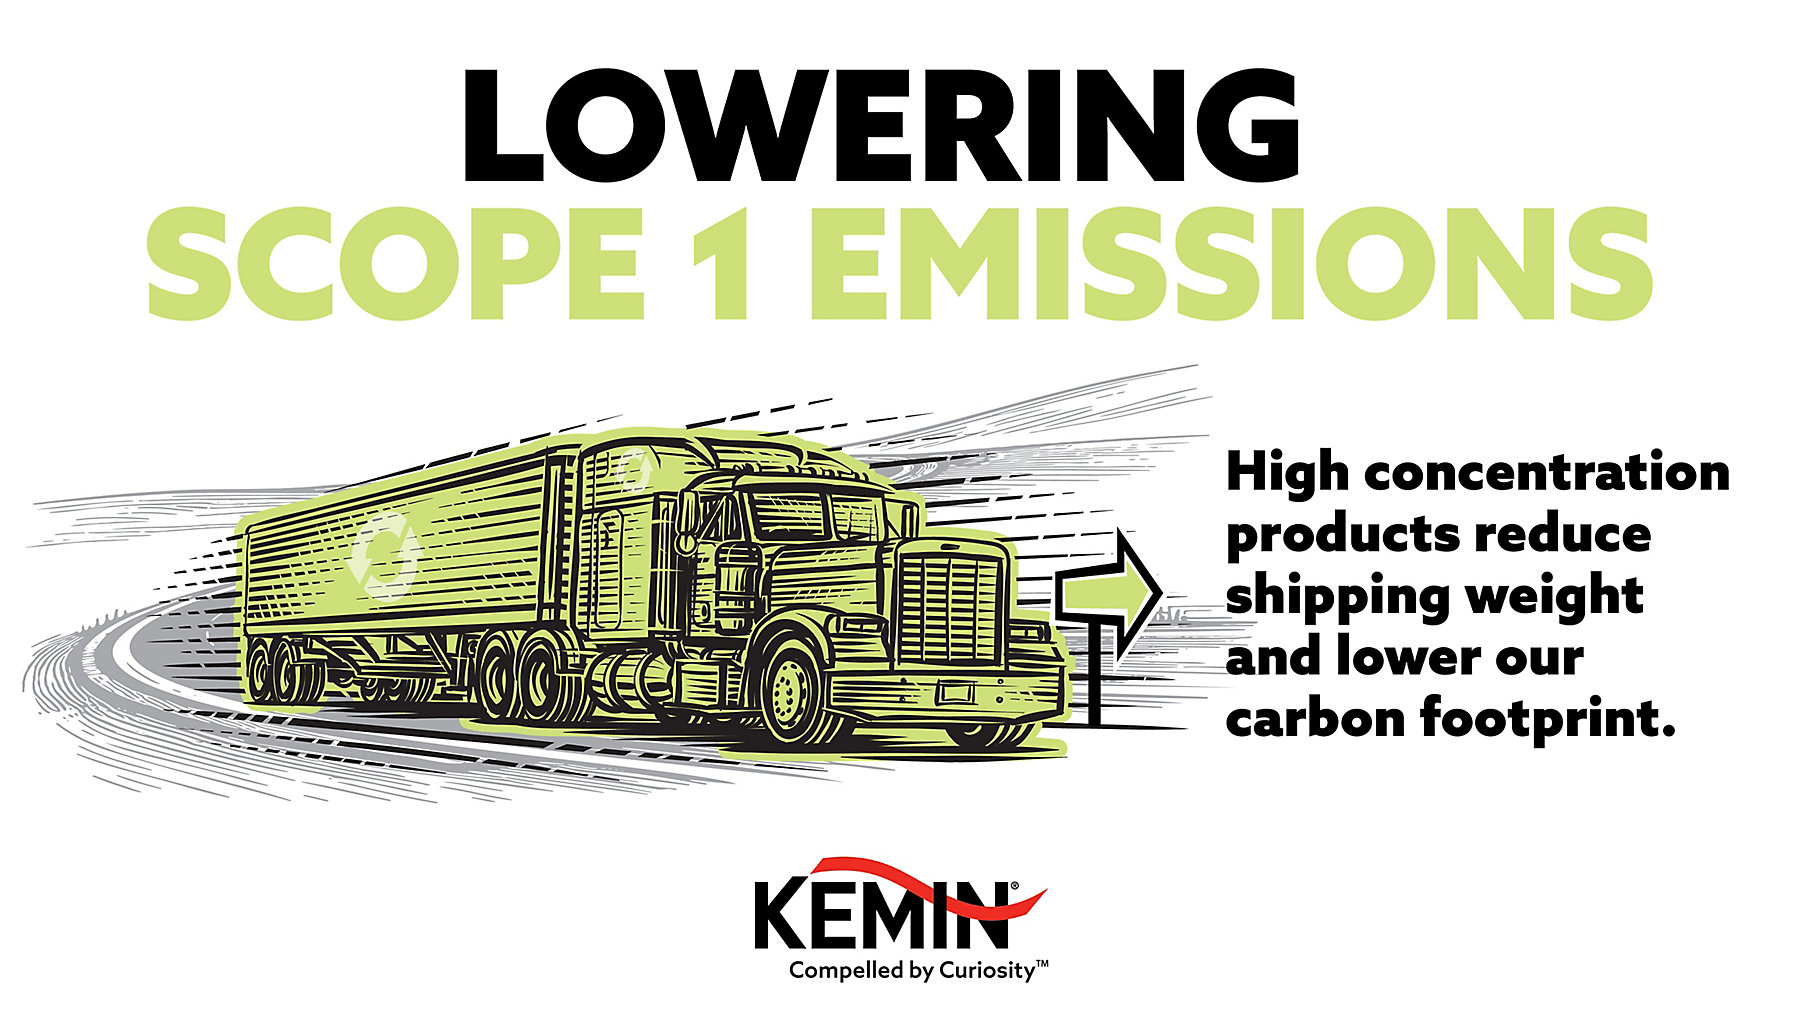 Lowering Scope 1 Emissions